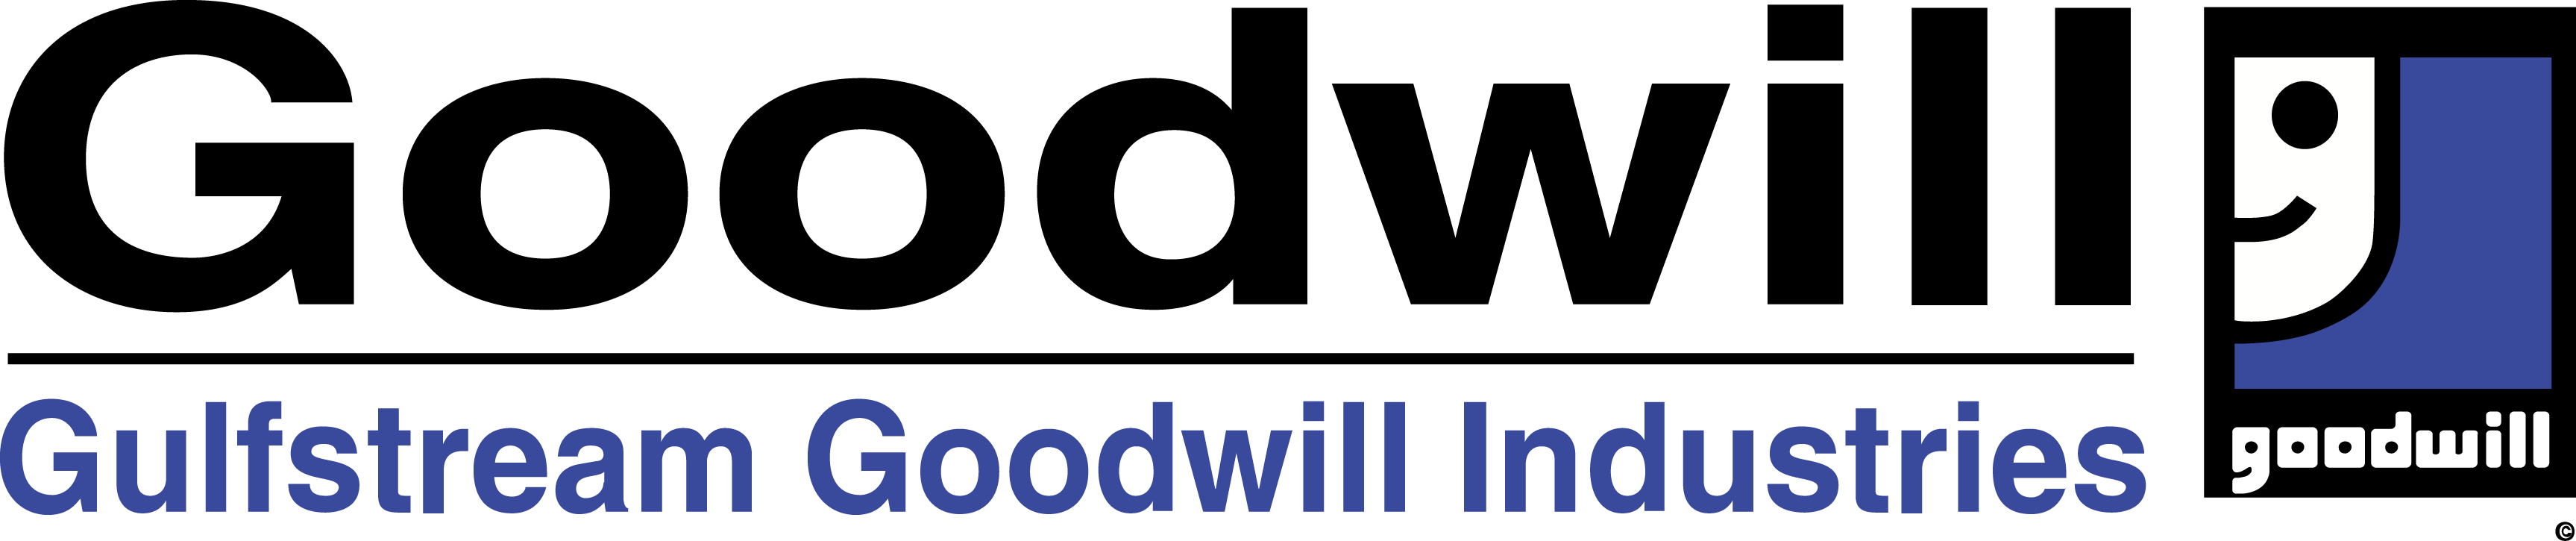 Goodwill Logo png